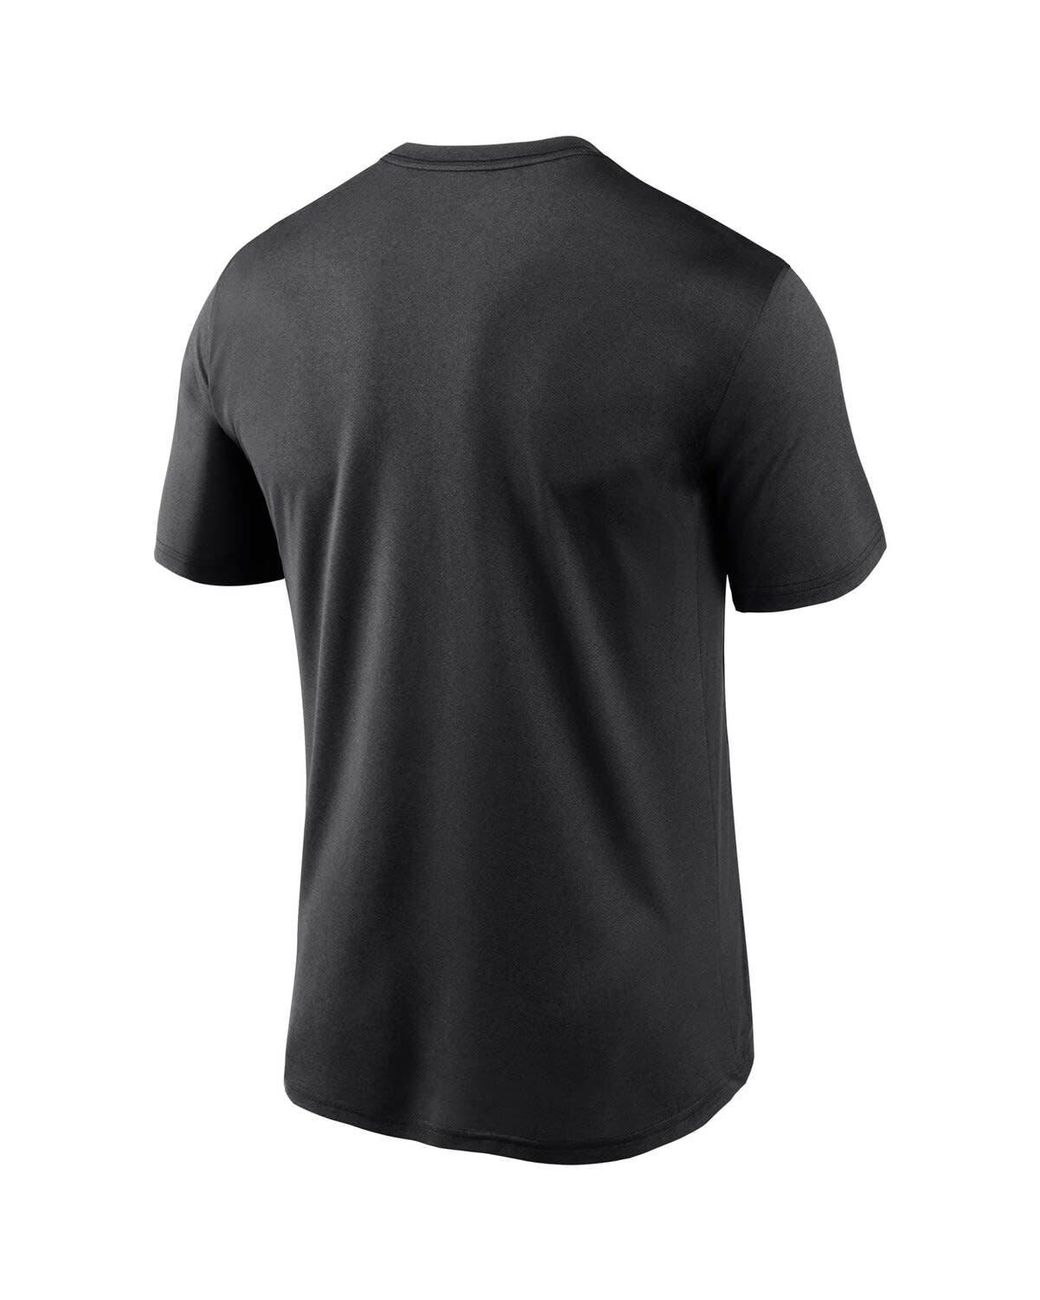 Seattle Mariners Nike New Legend Wordmark T-Shirt - Aqua